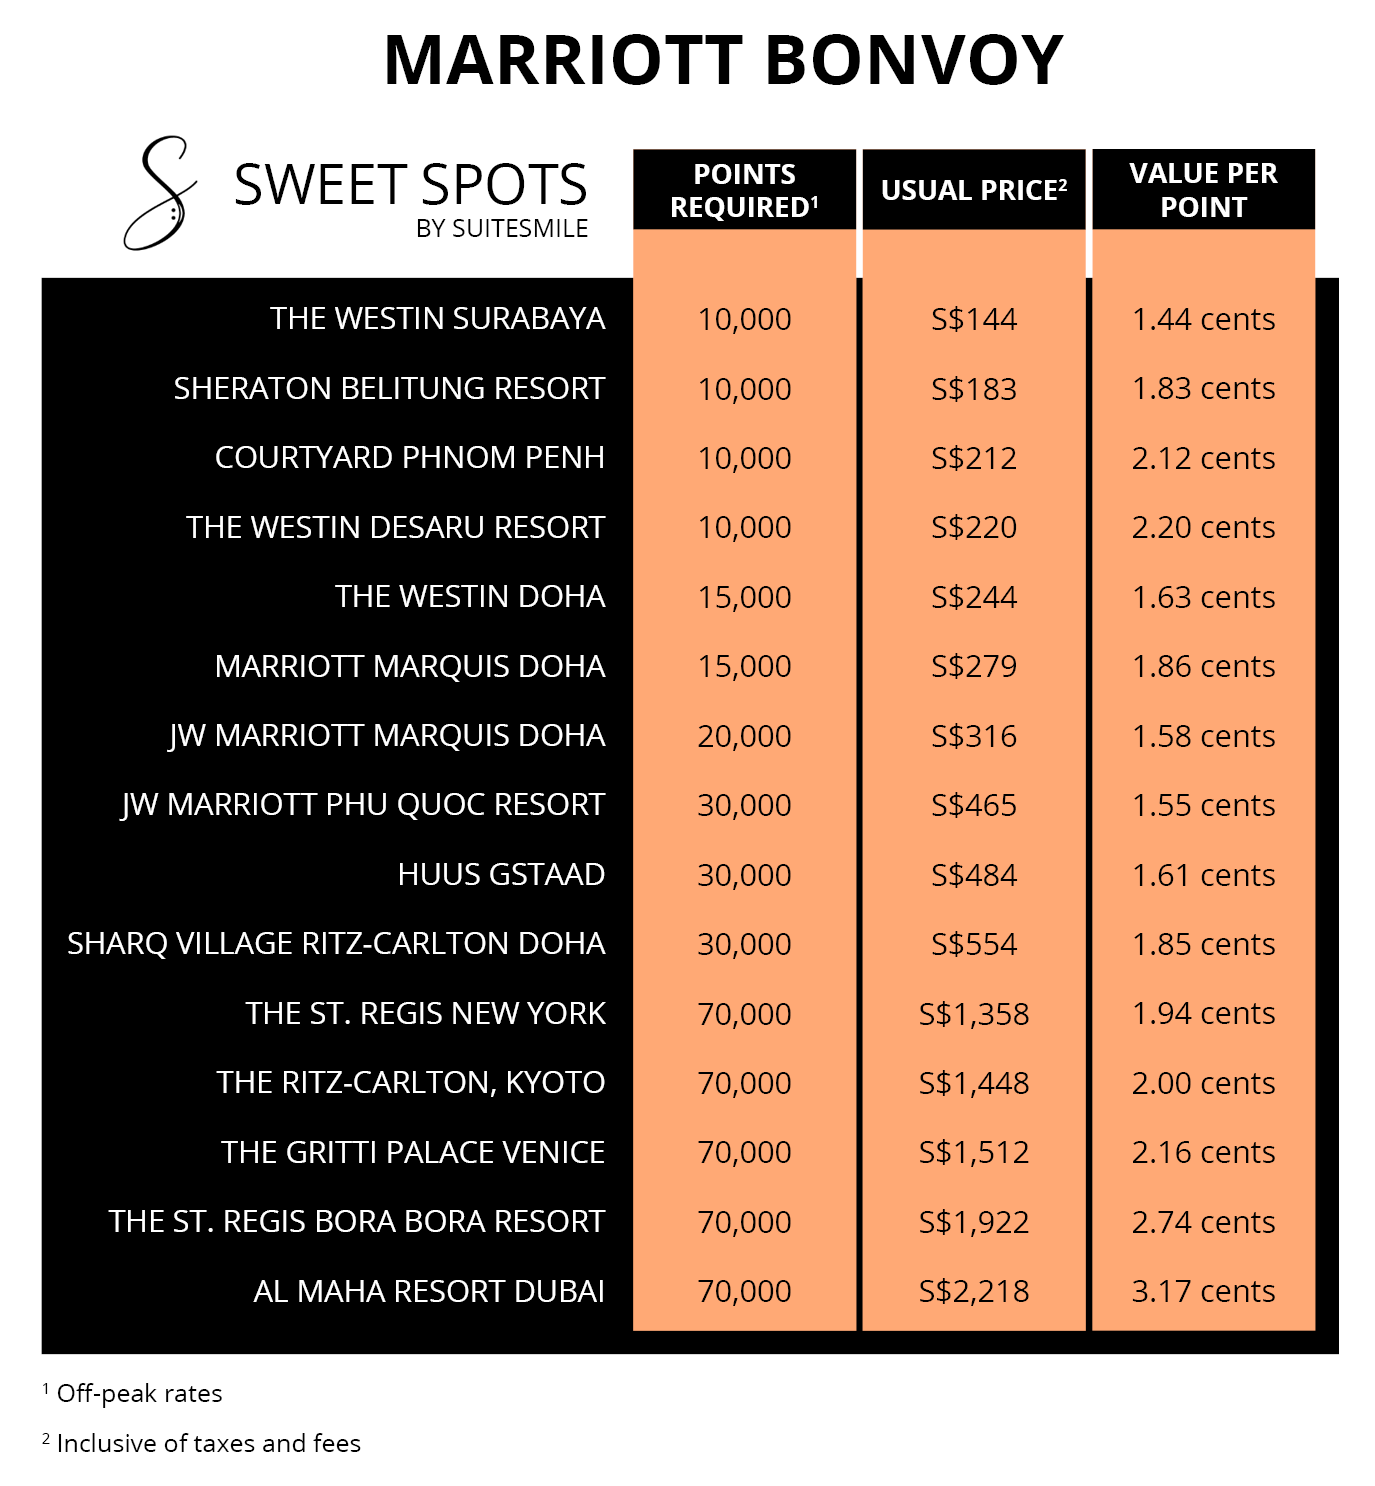 Marriott Bonvoy sweet spots